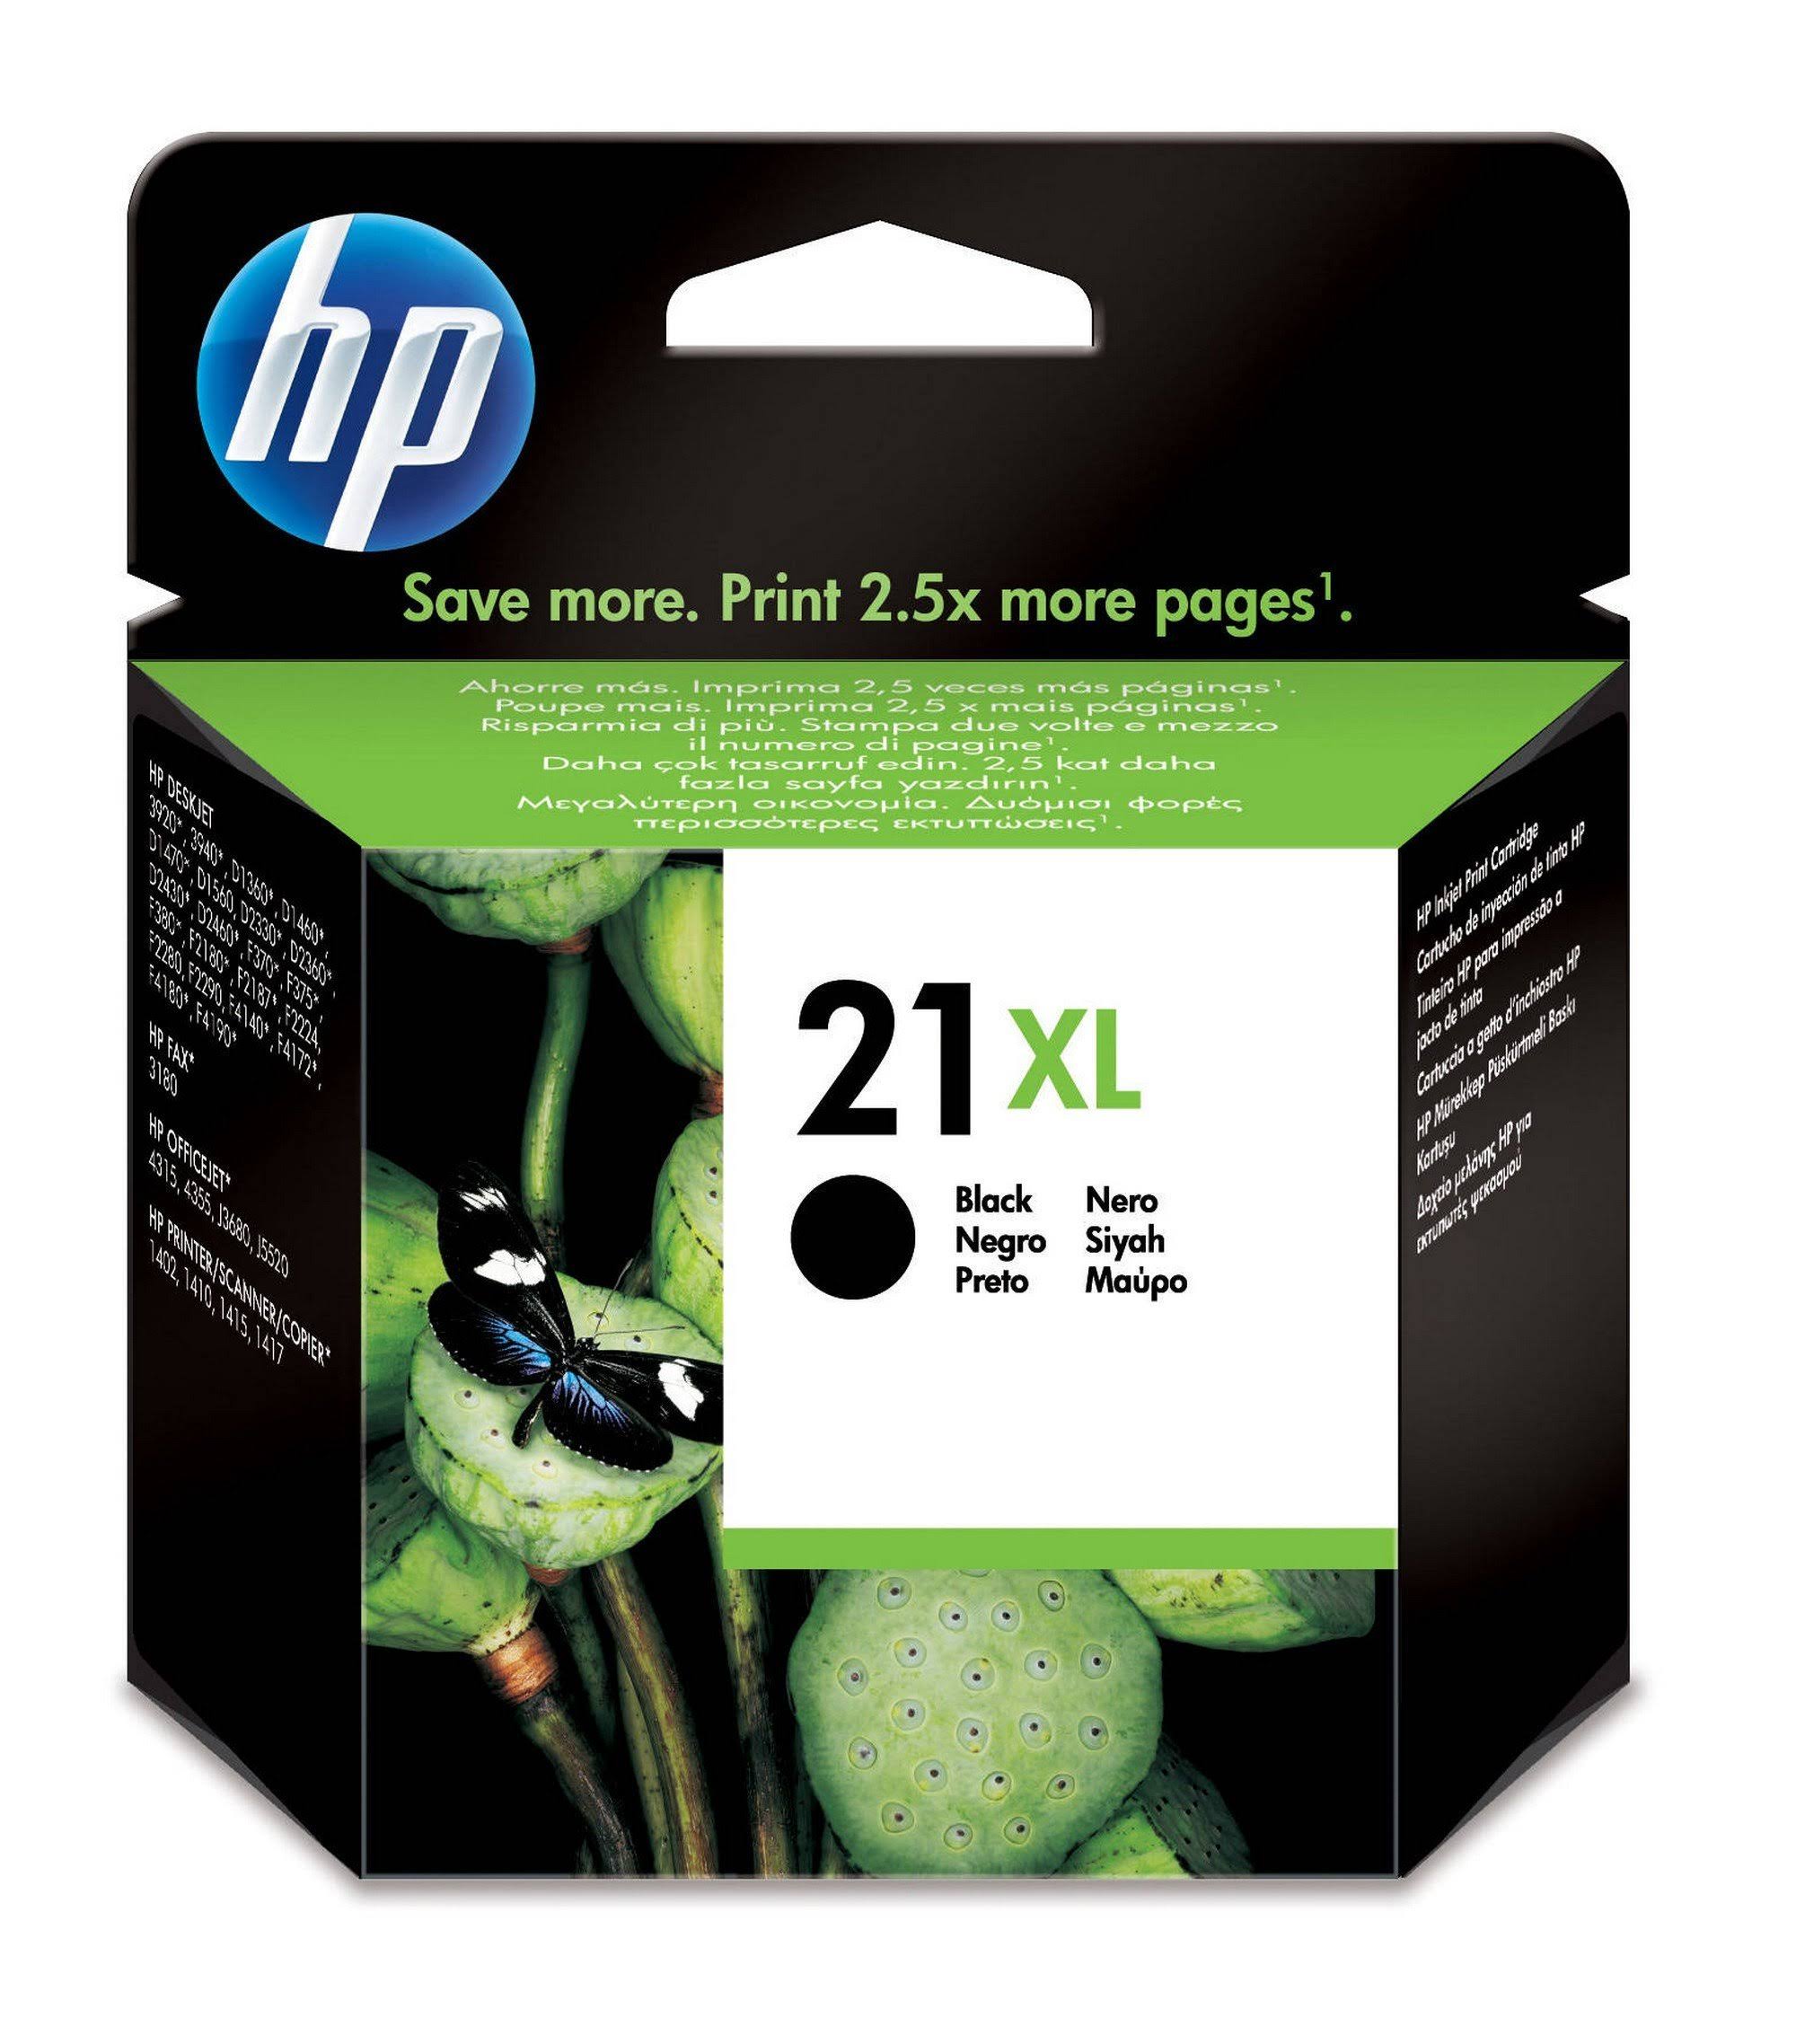 HP Printer Ink Cartridge - 21XL Black